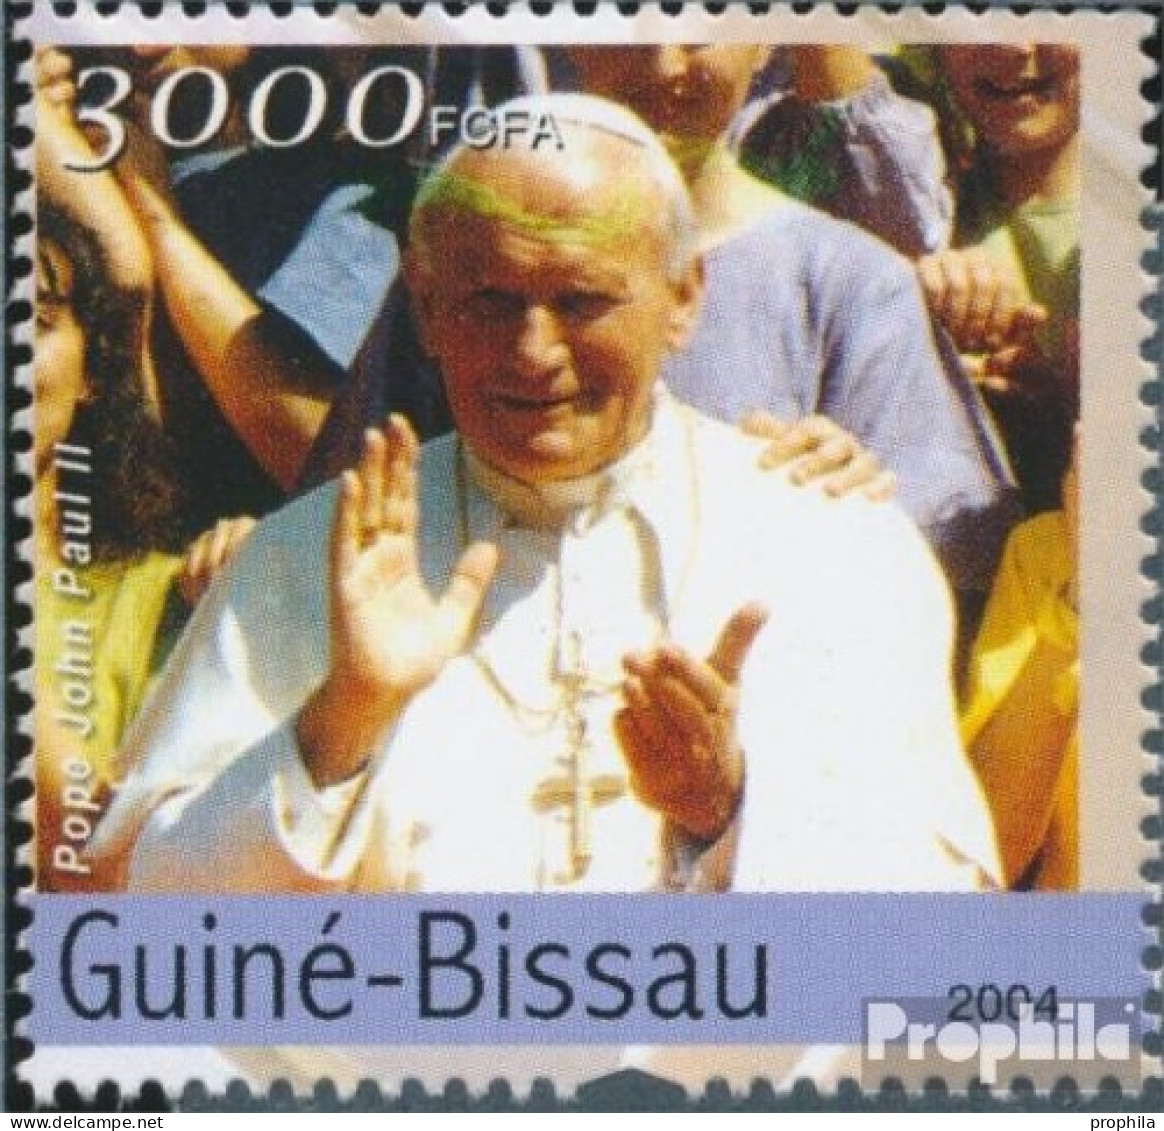 Guinea-Bissau 2712 (kompl. Ausgabe) Postfrisch 2004 Papst Johannes Paul II. - Guinea-Bissau